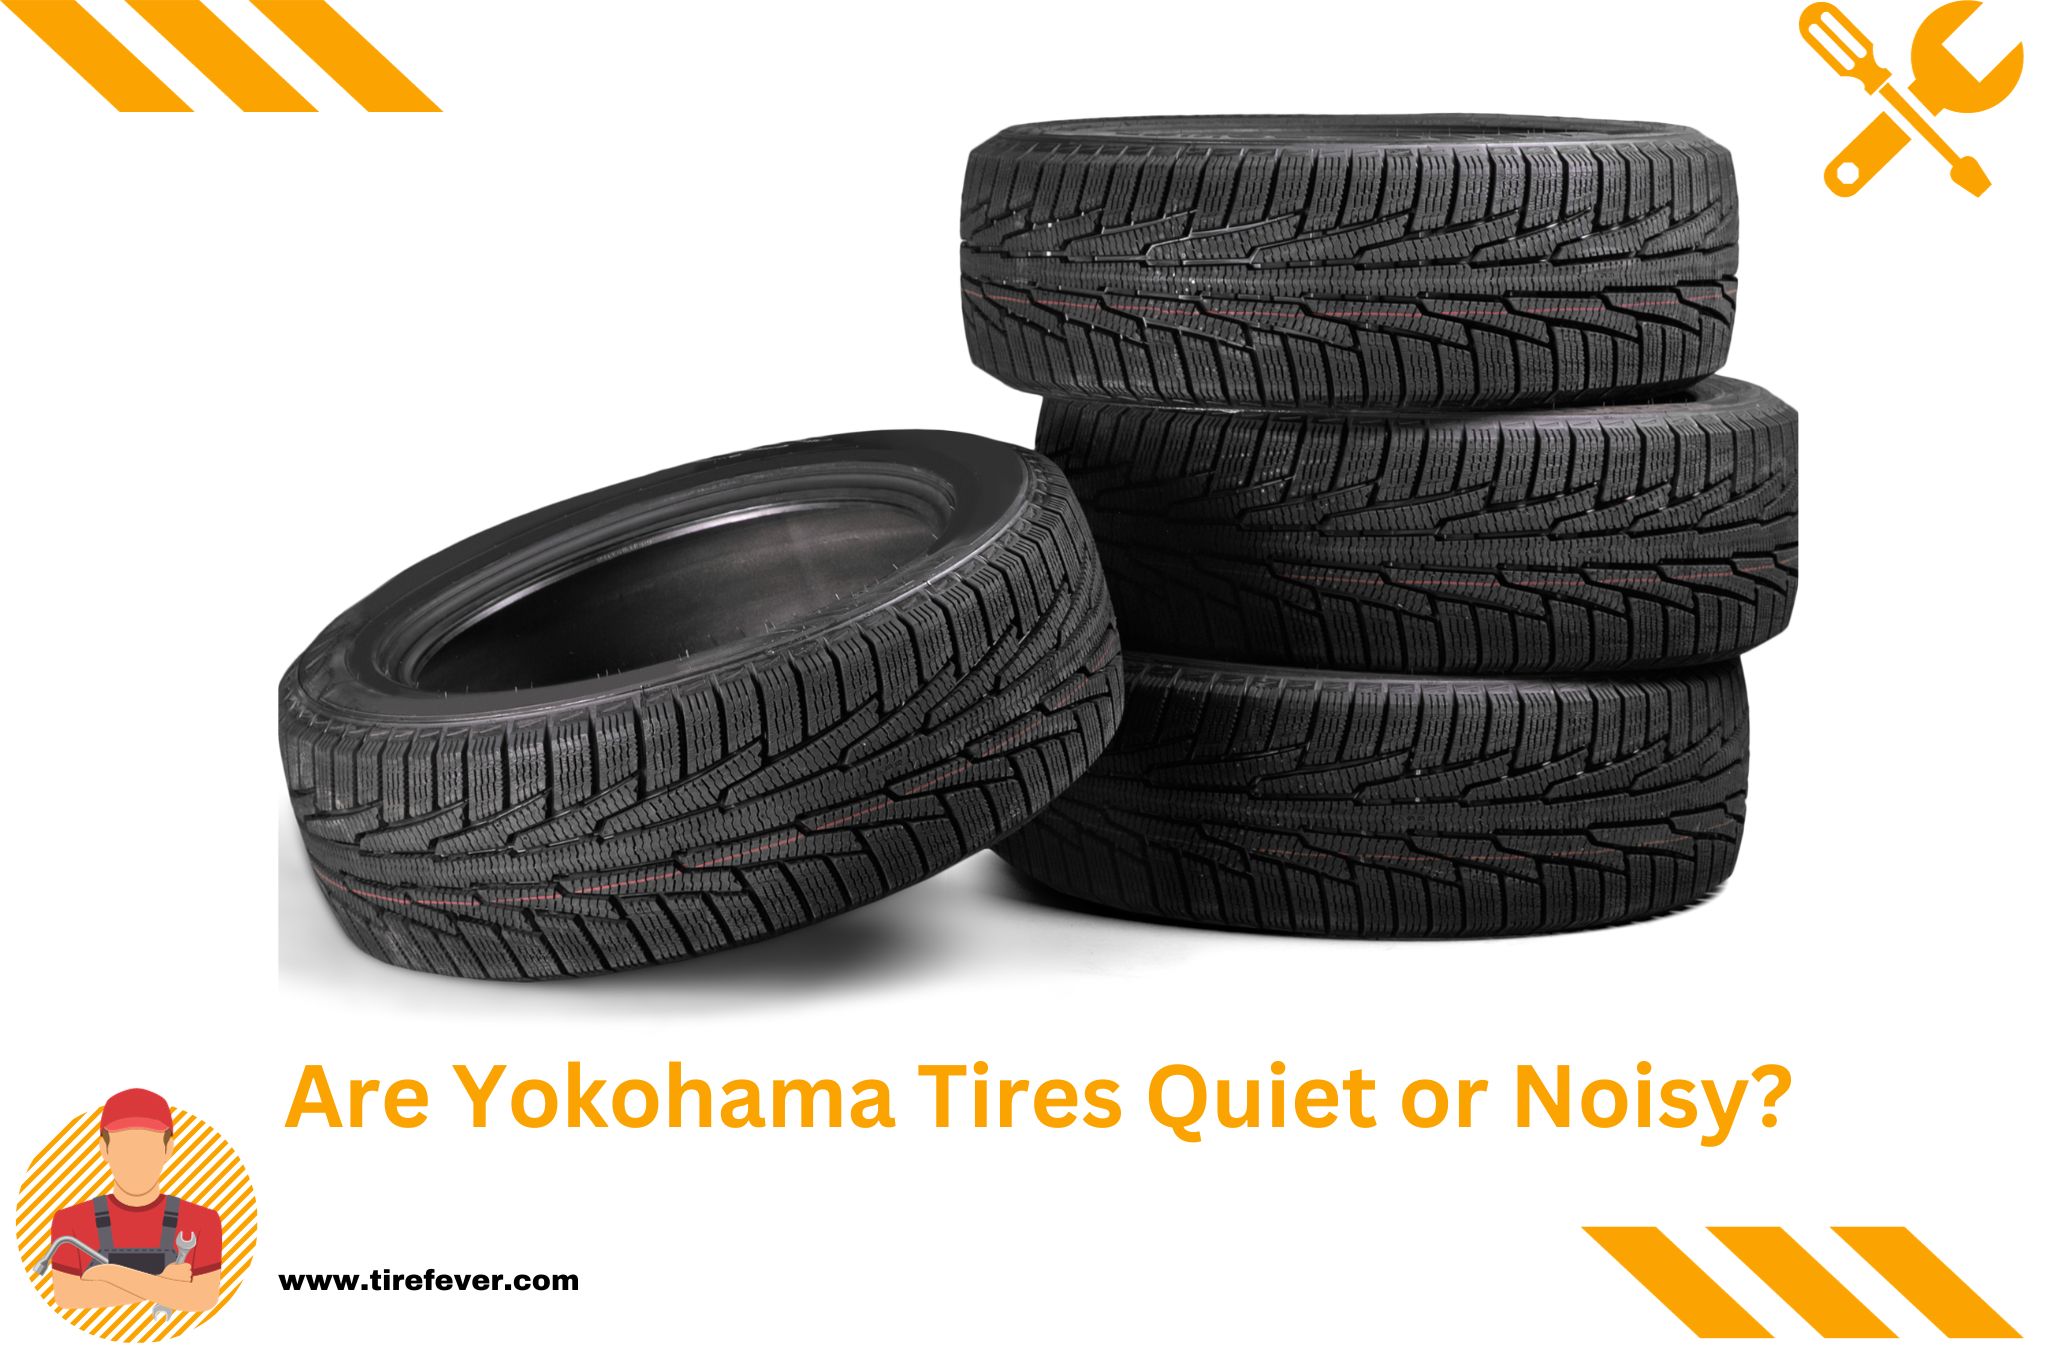 Are Yokohama Tires Quiet or Noisy?